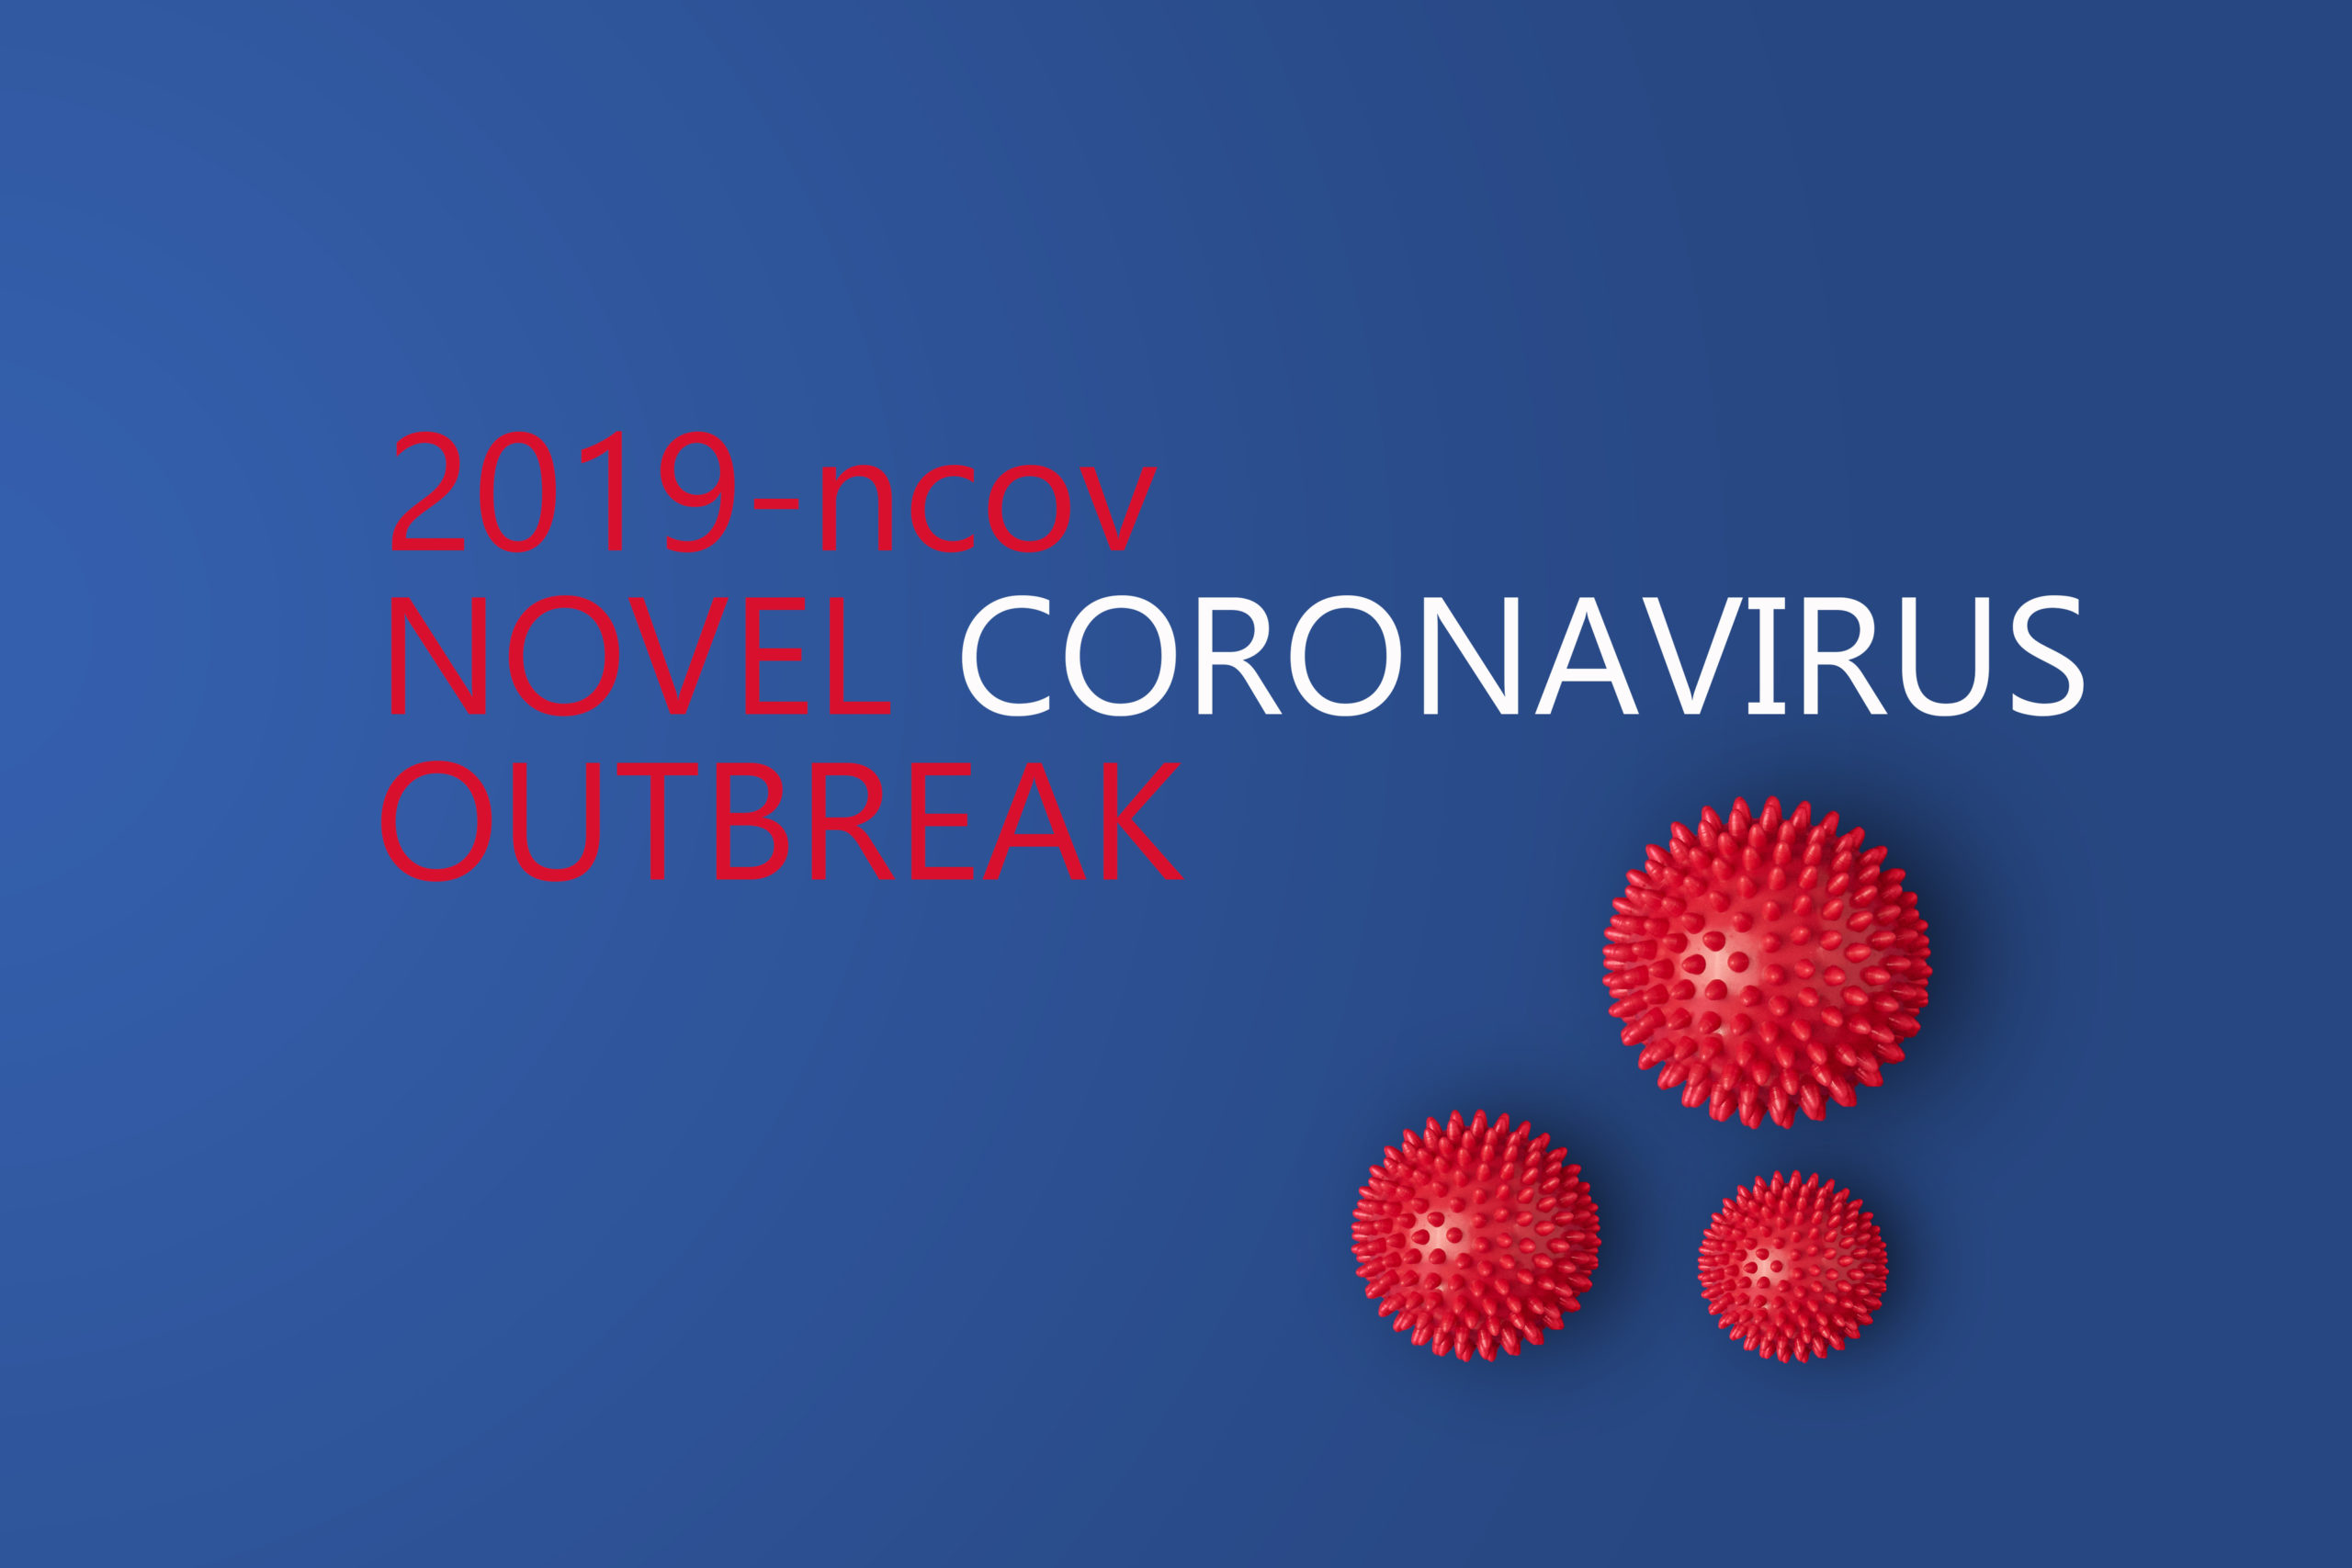 Abstarct virus strain model of Novel coronavirus 2019-nCoV with text on blue background